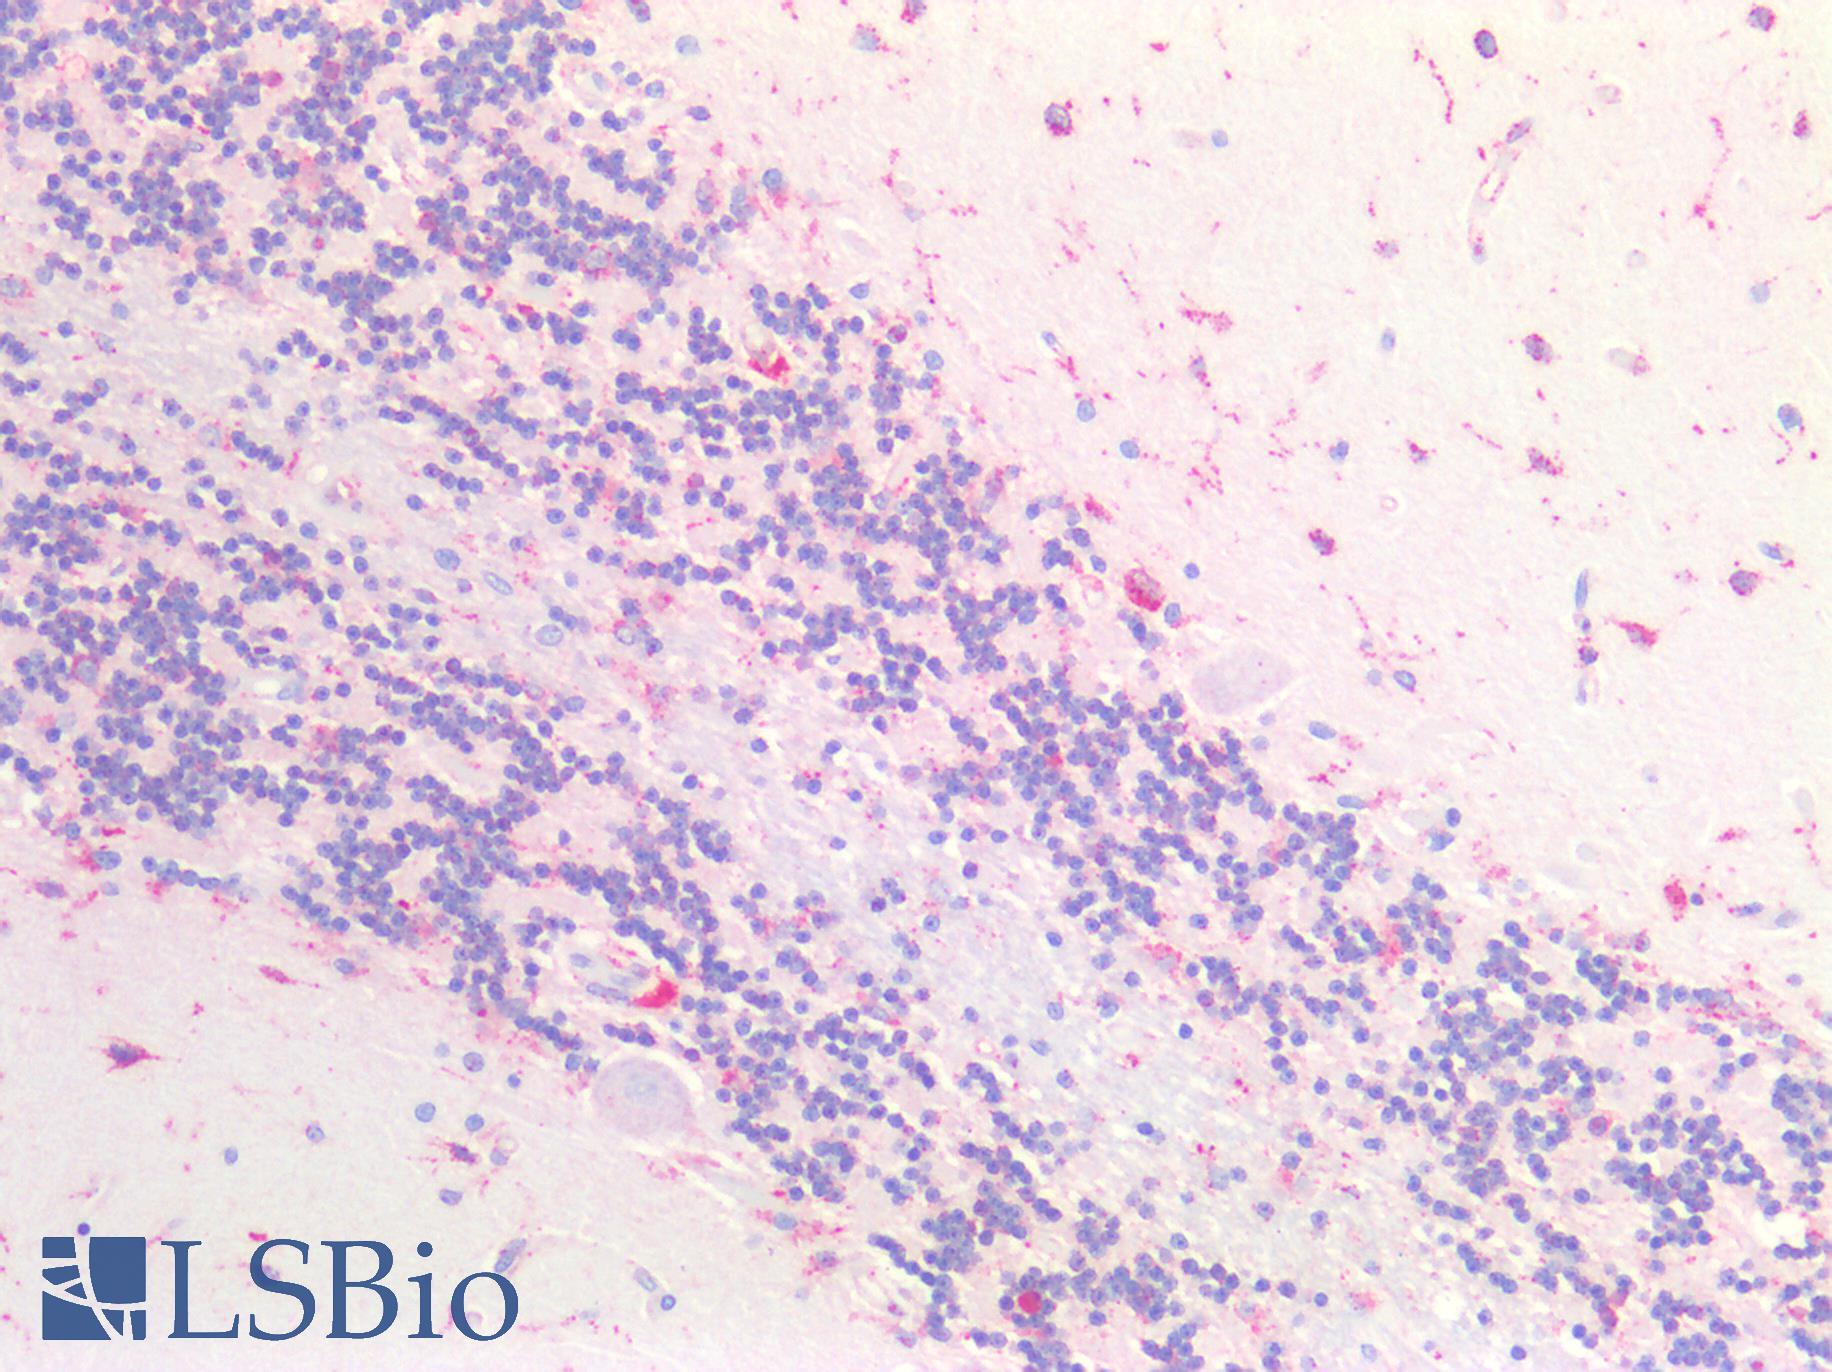 CTSB / Cathepsin B Antibody - Human Brain, Cerebellum: Formalin-Fixed, Paraffin-Embedded (FFPE)